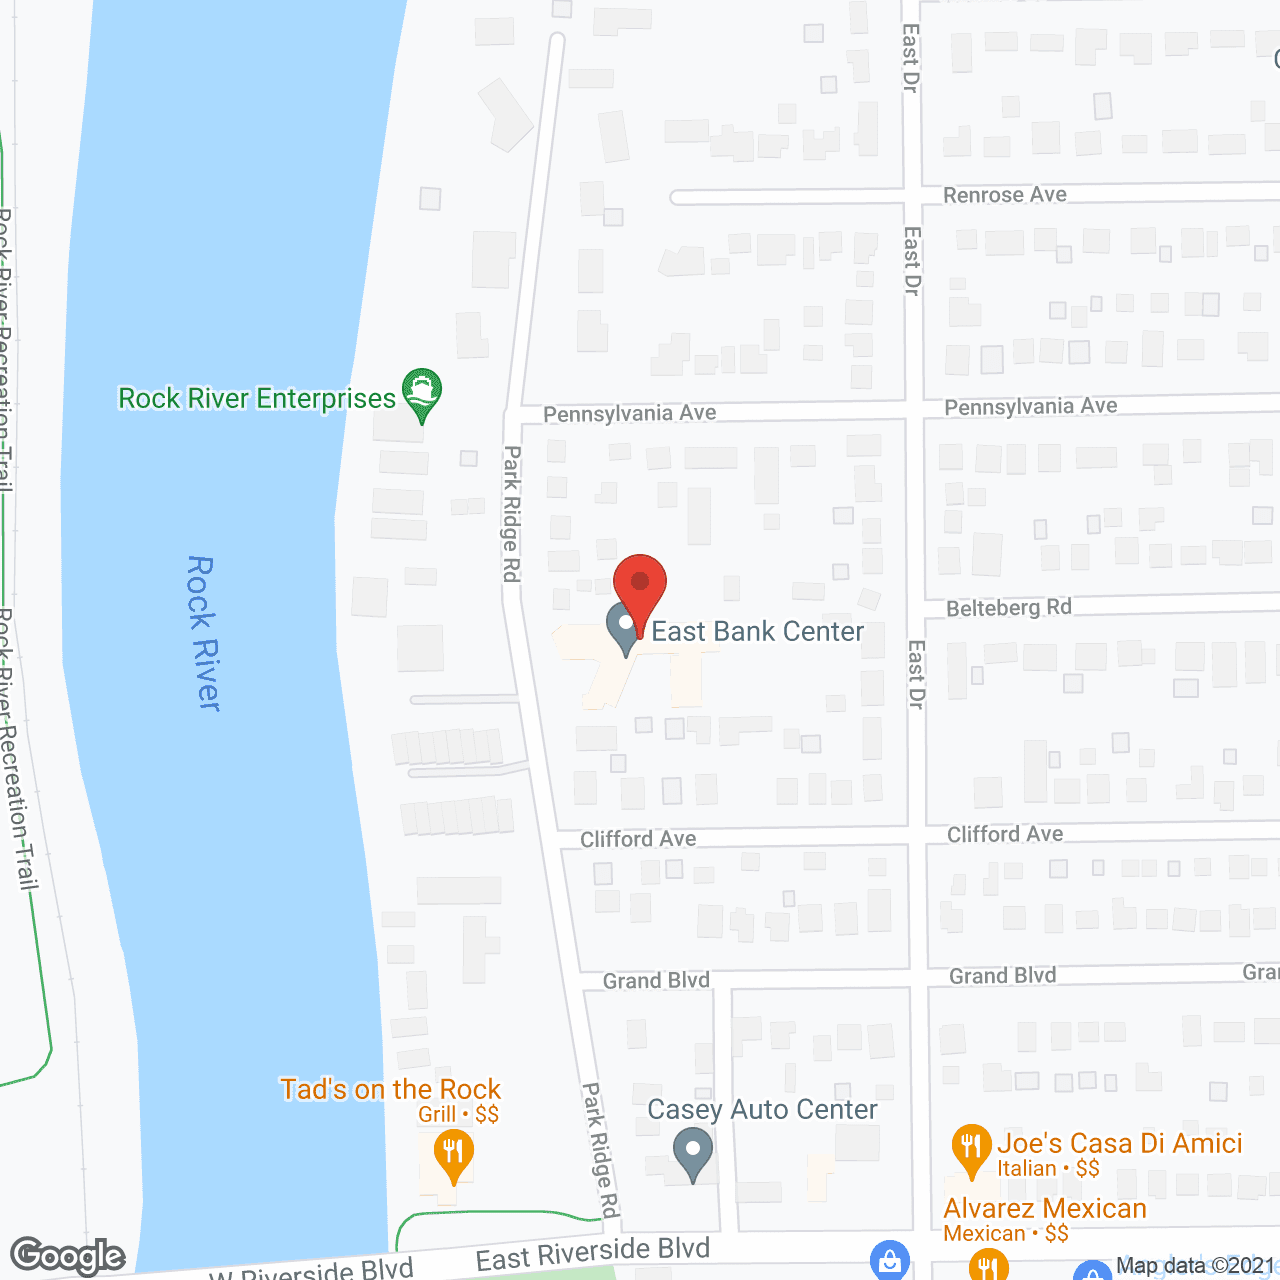 Park Ridge Terrace in google map